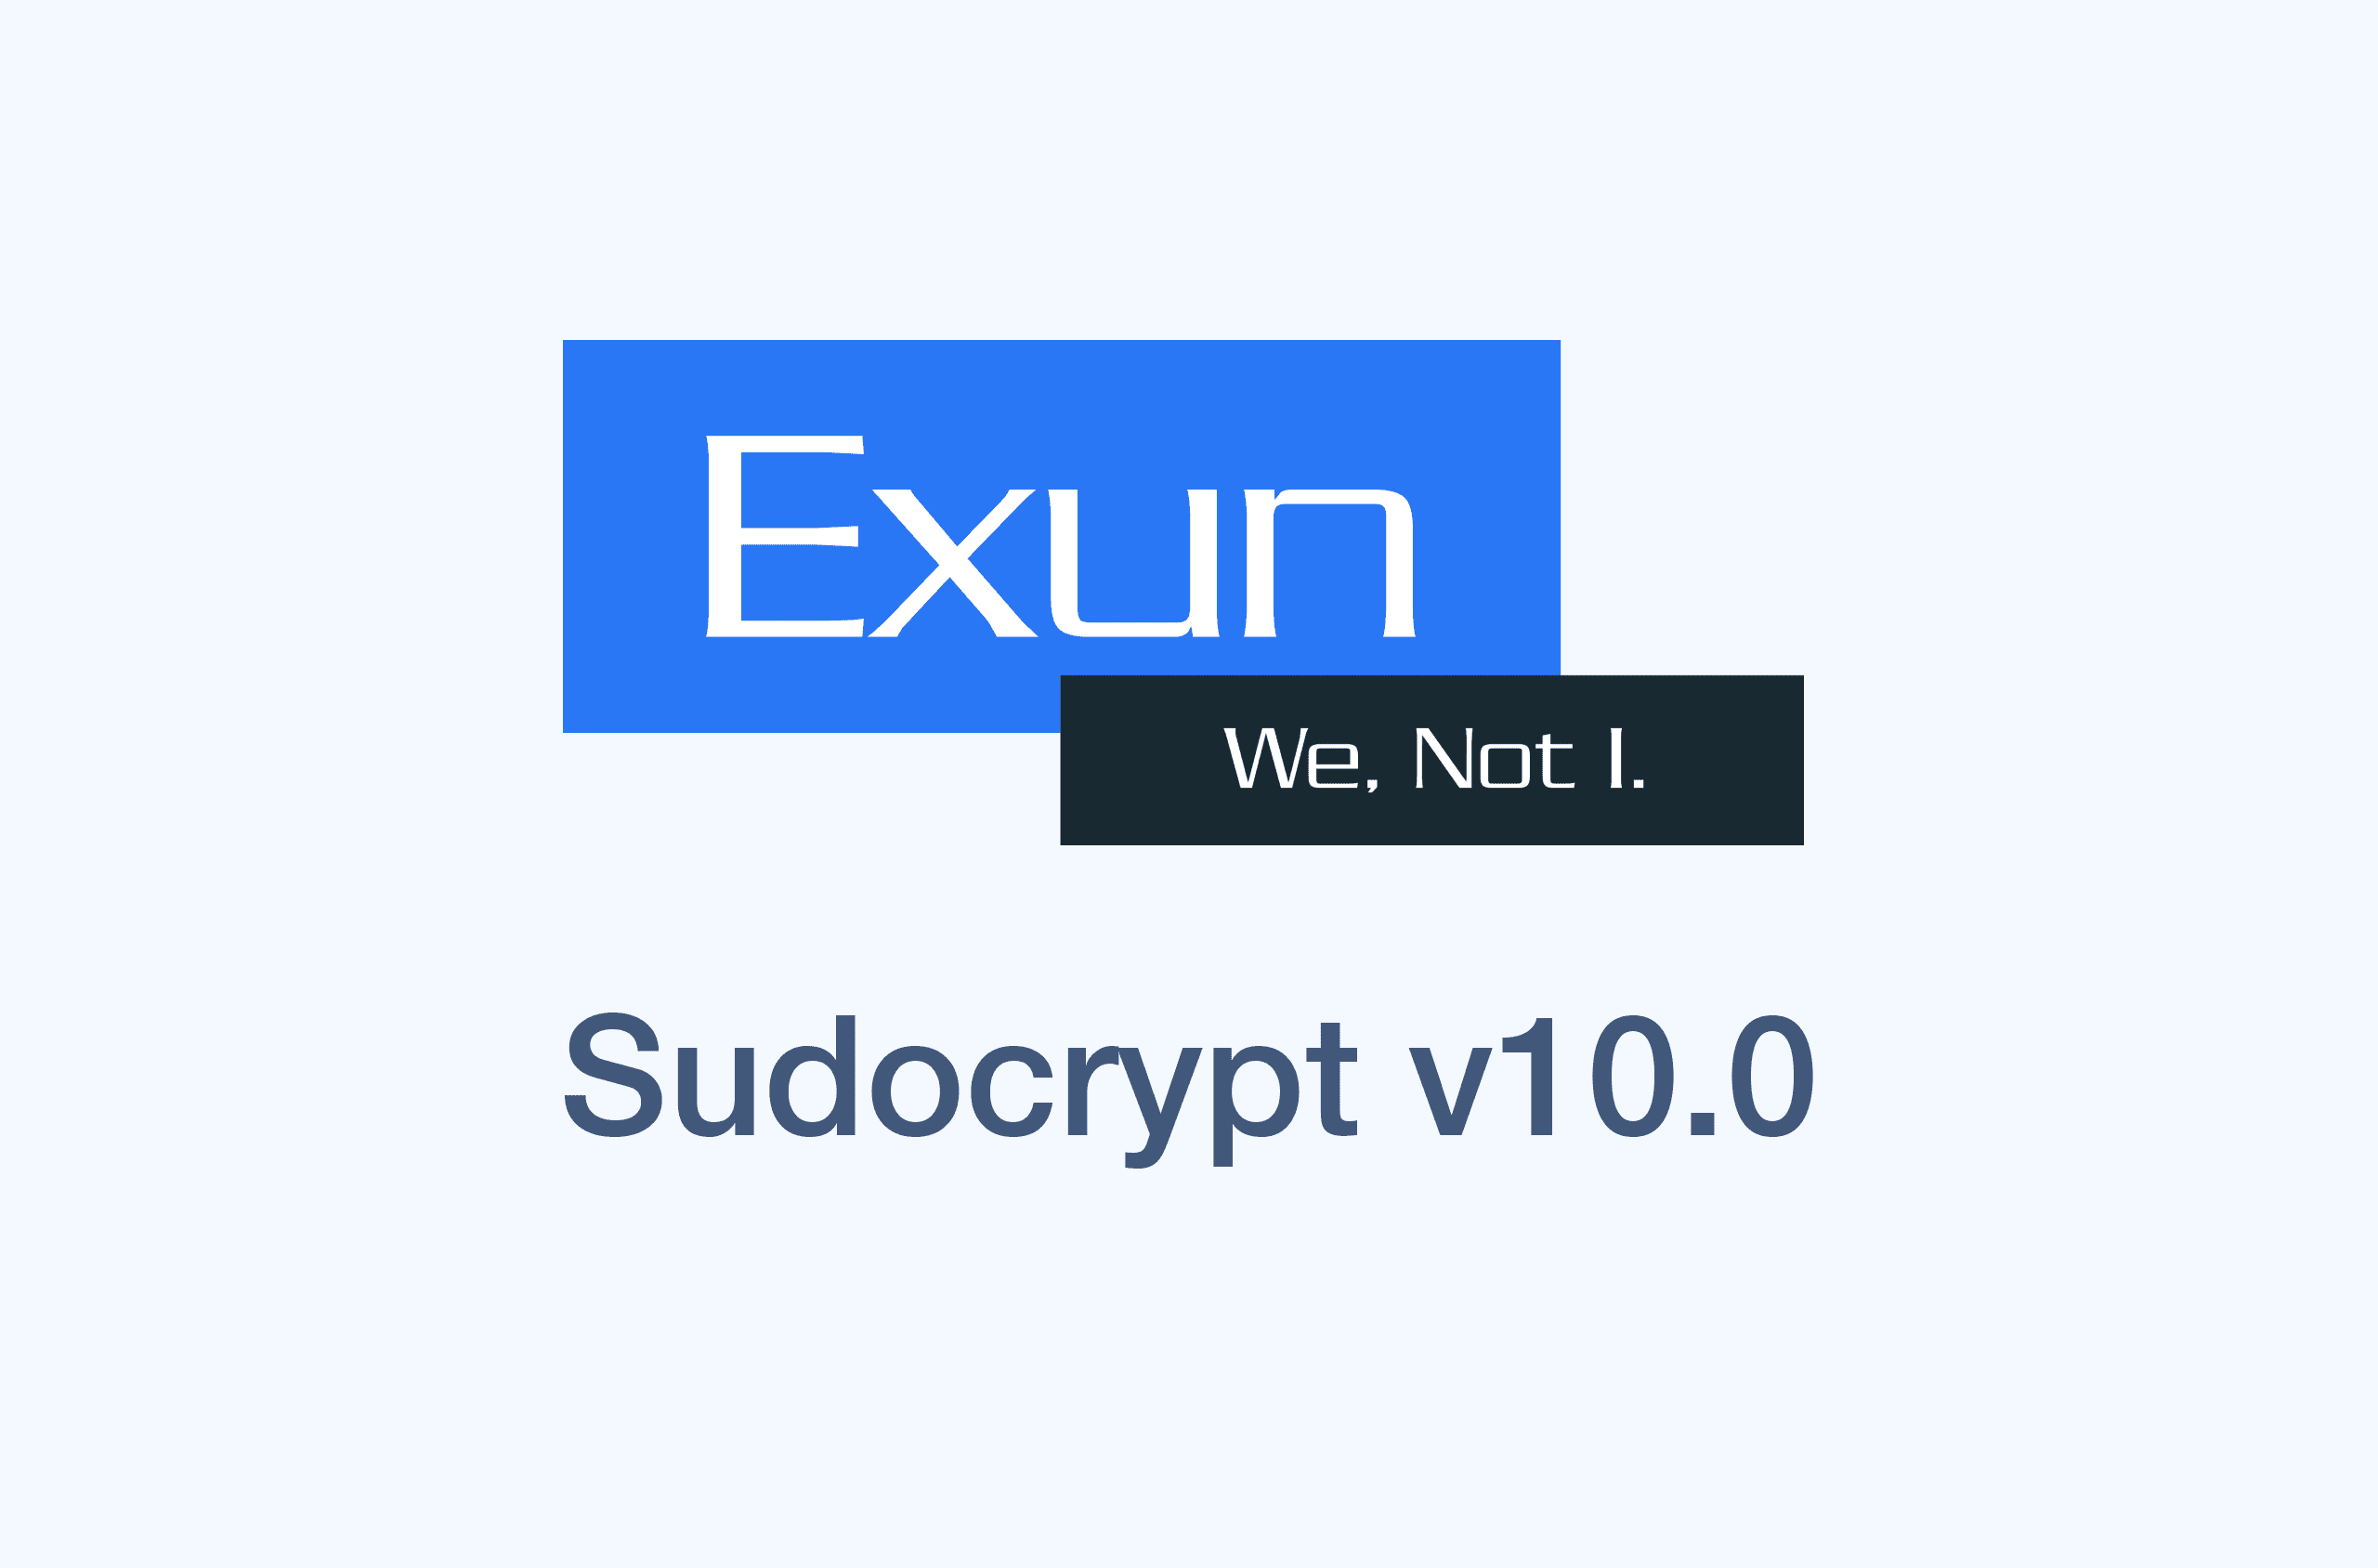 Sudocrypt v10.0's image